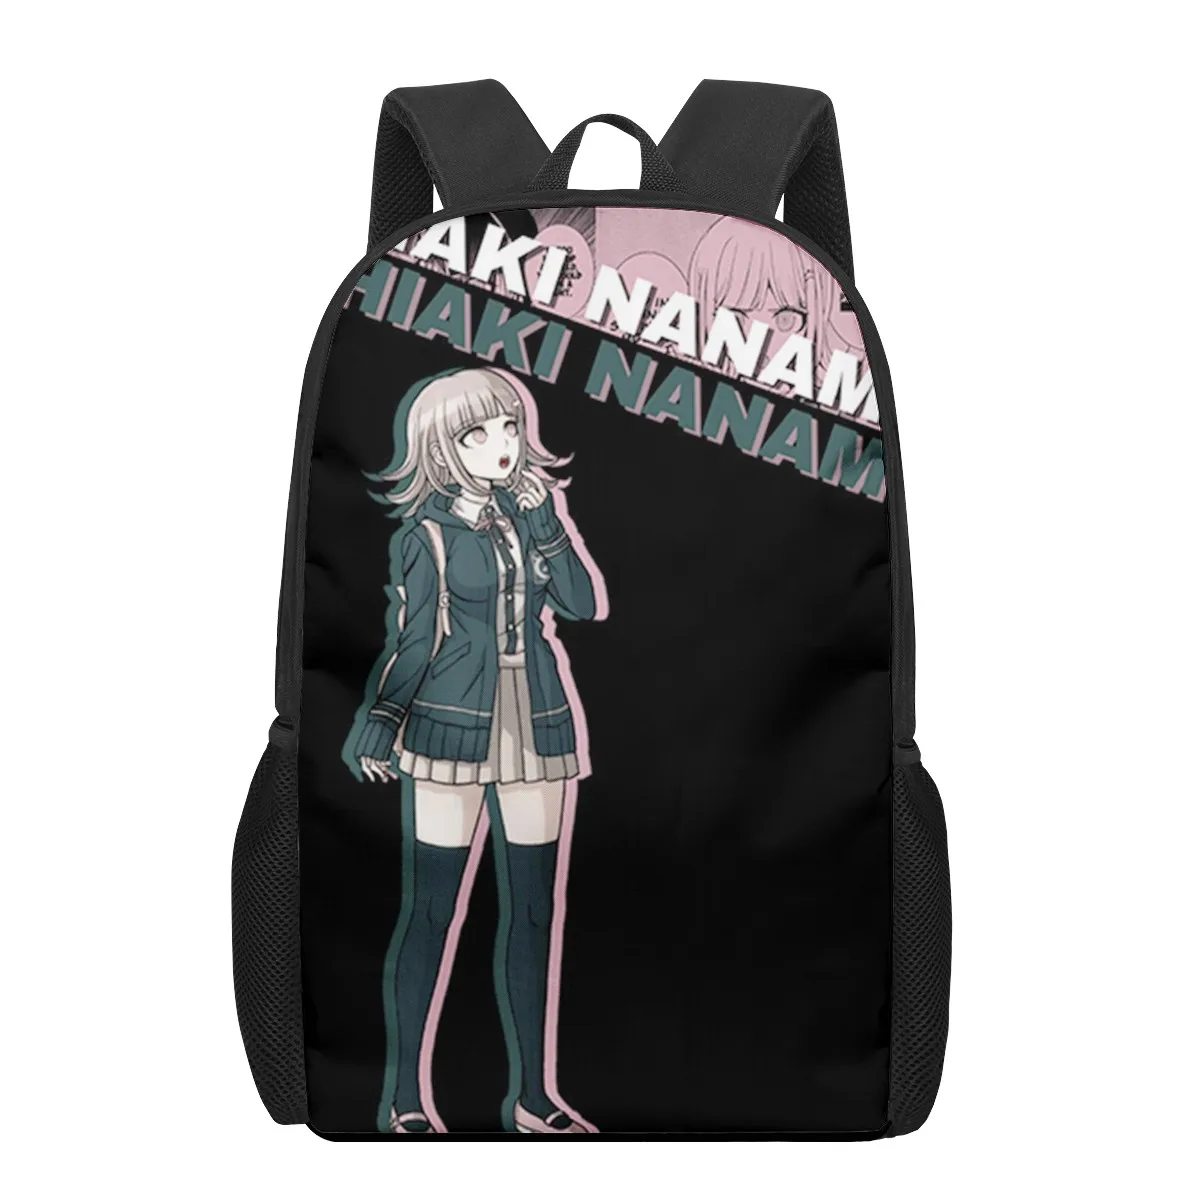 Nanami ChiaKi Danganronpa 2021 School Bags Fashion Print Backpacks For Teenage Boys Girls Schoolbag Book Bag 16 Kids Backpack